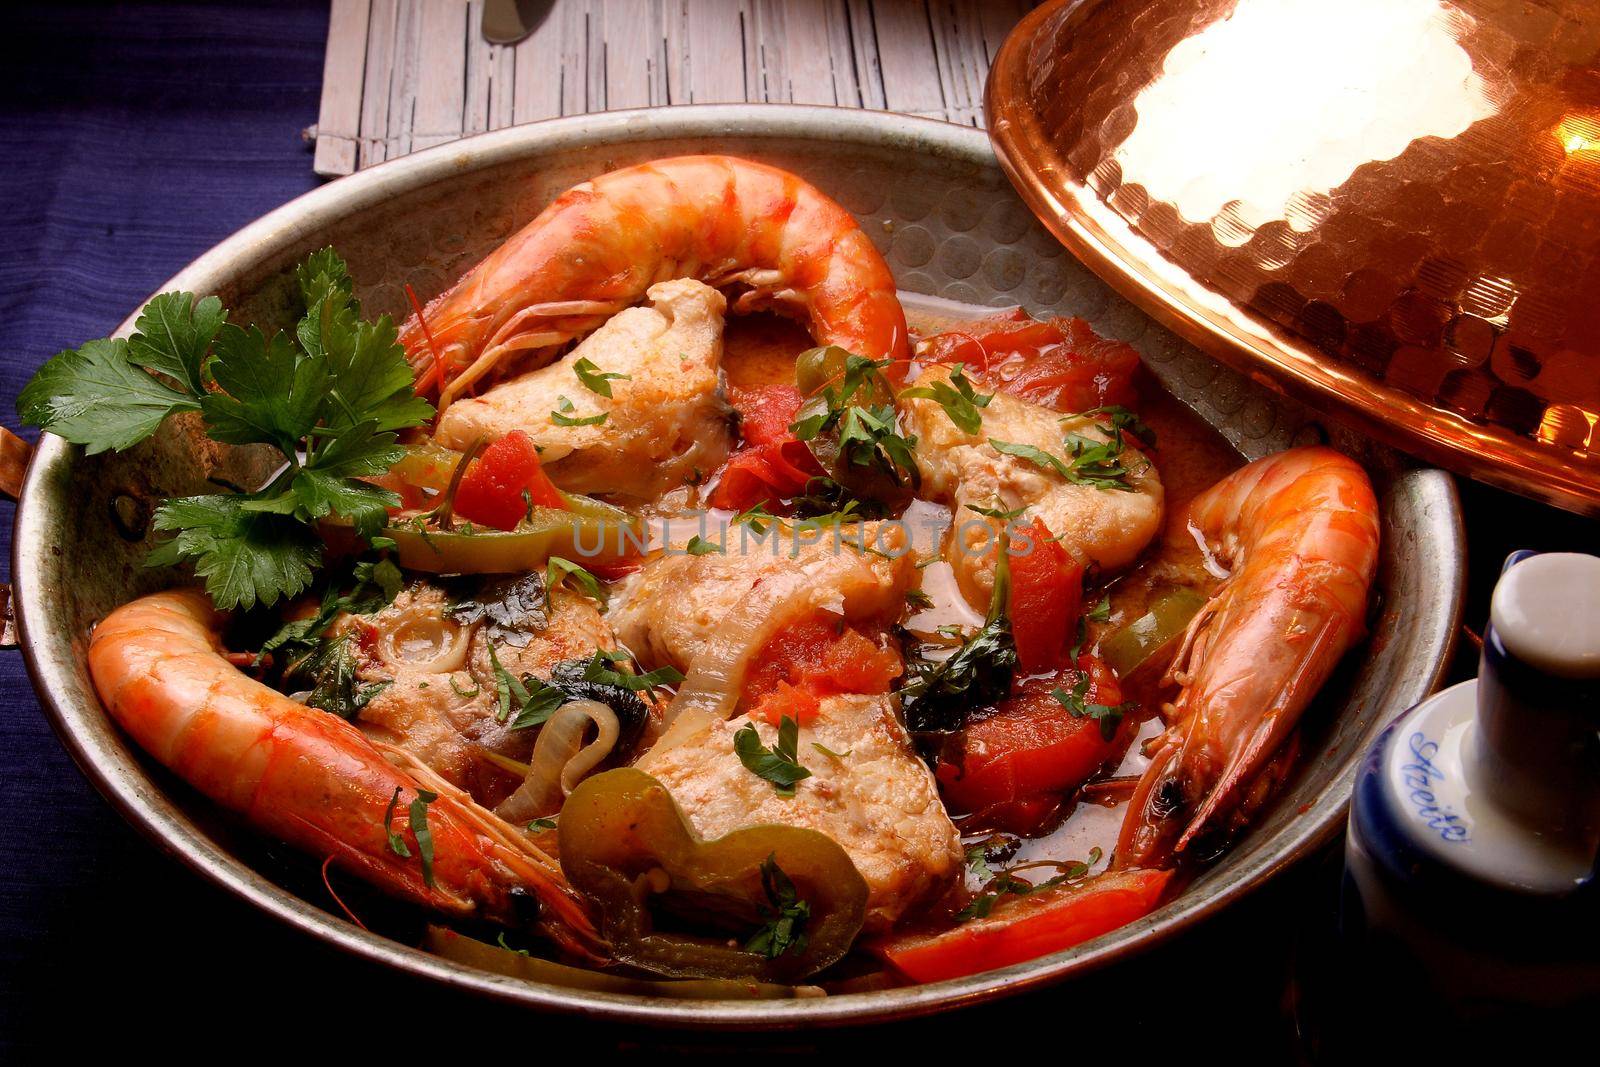 porto seguro, bahia / brazil - june 9, 2007:shrimp prepared in a restaurant in the city of Porto Seguro, in the south of Bahia.